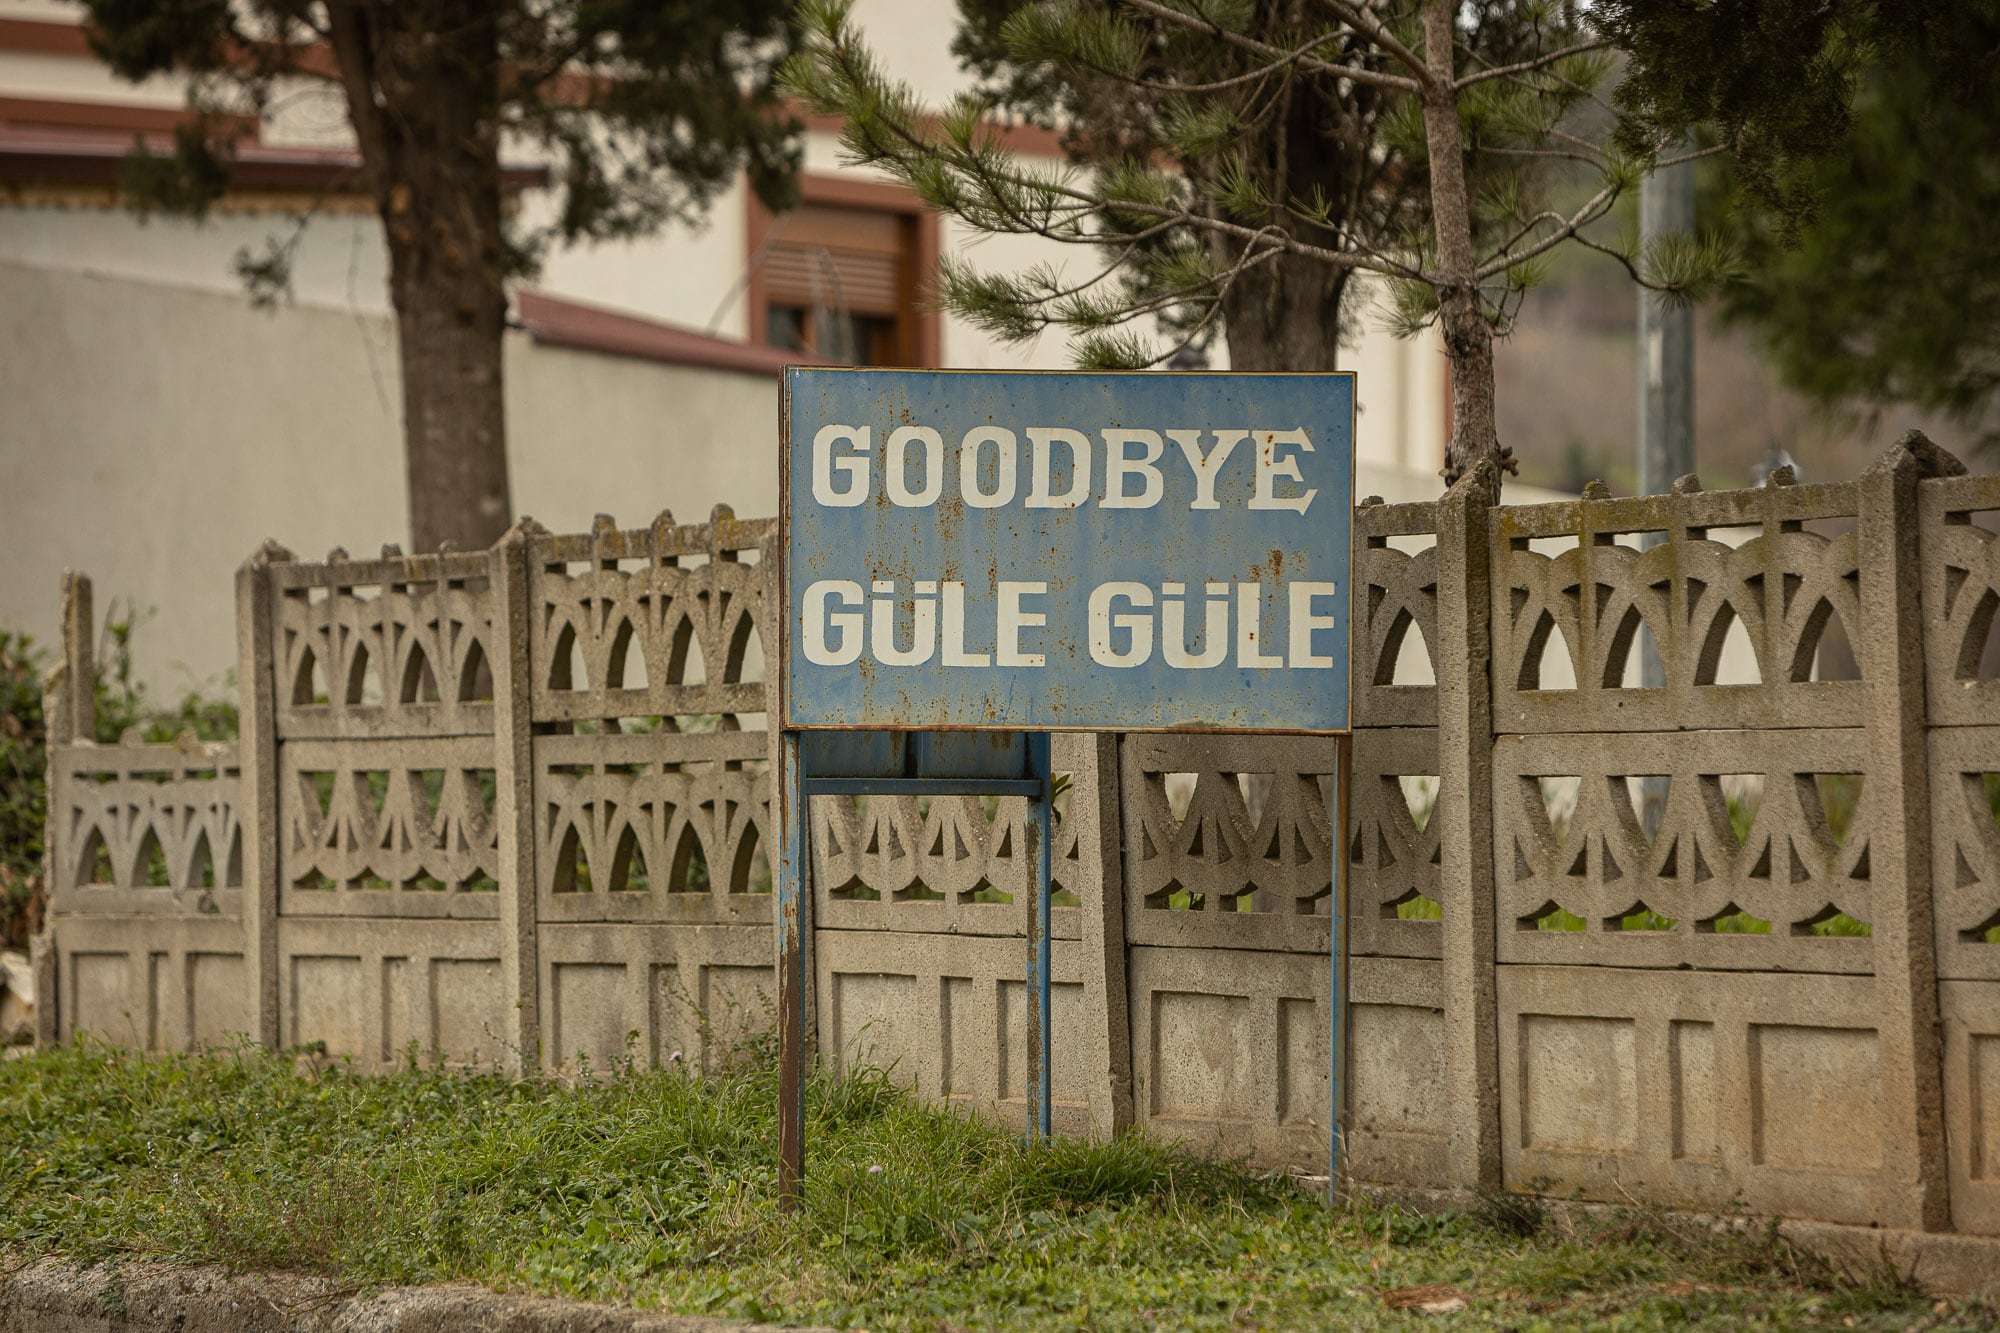 The village of Pinarli says goodbye in English